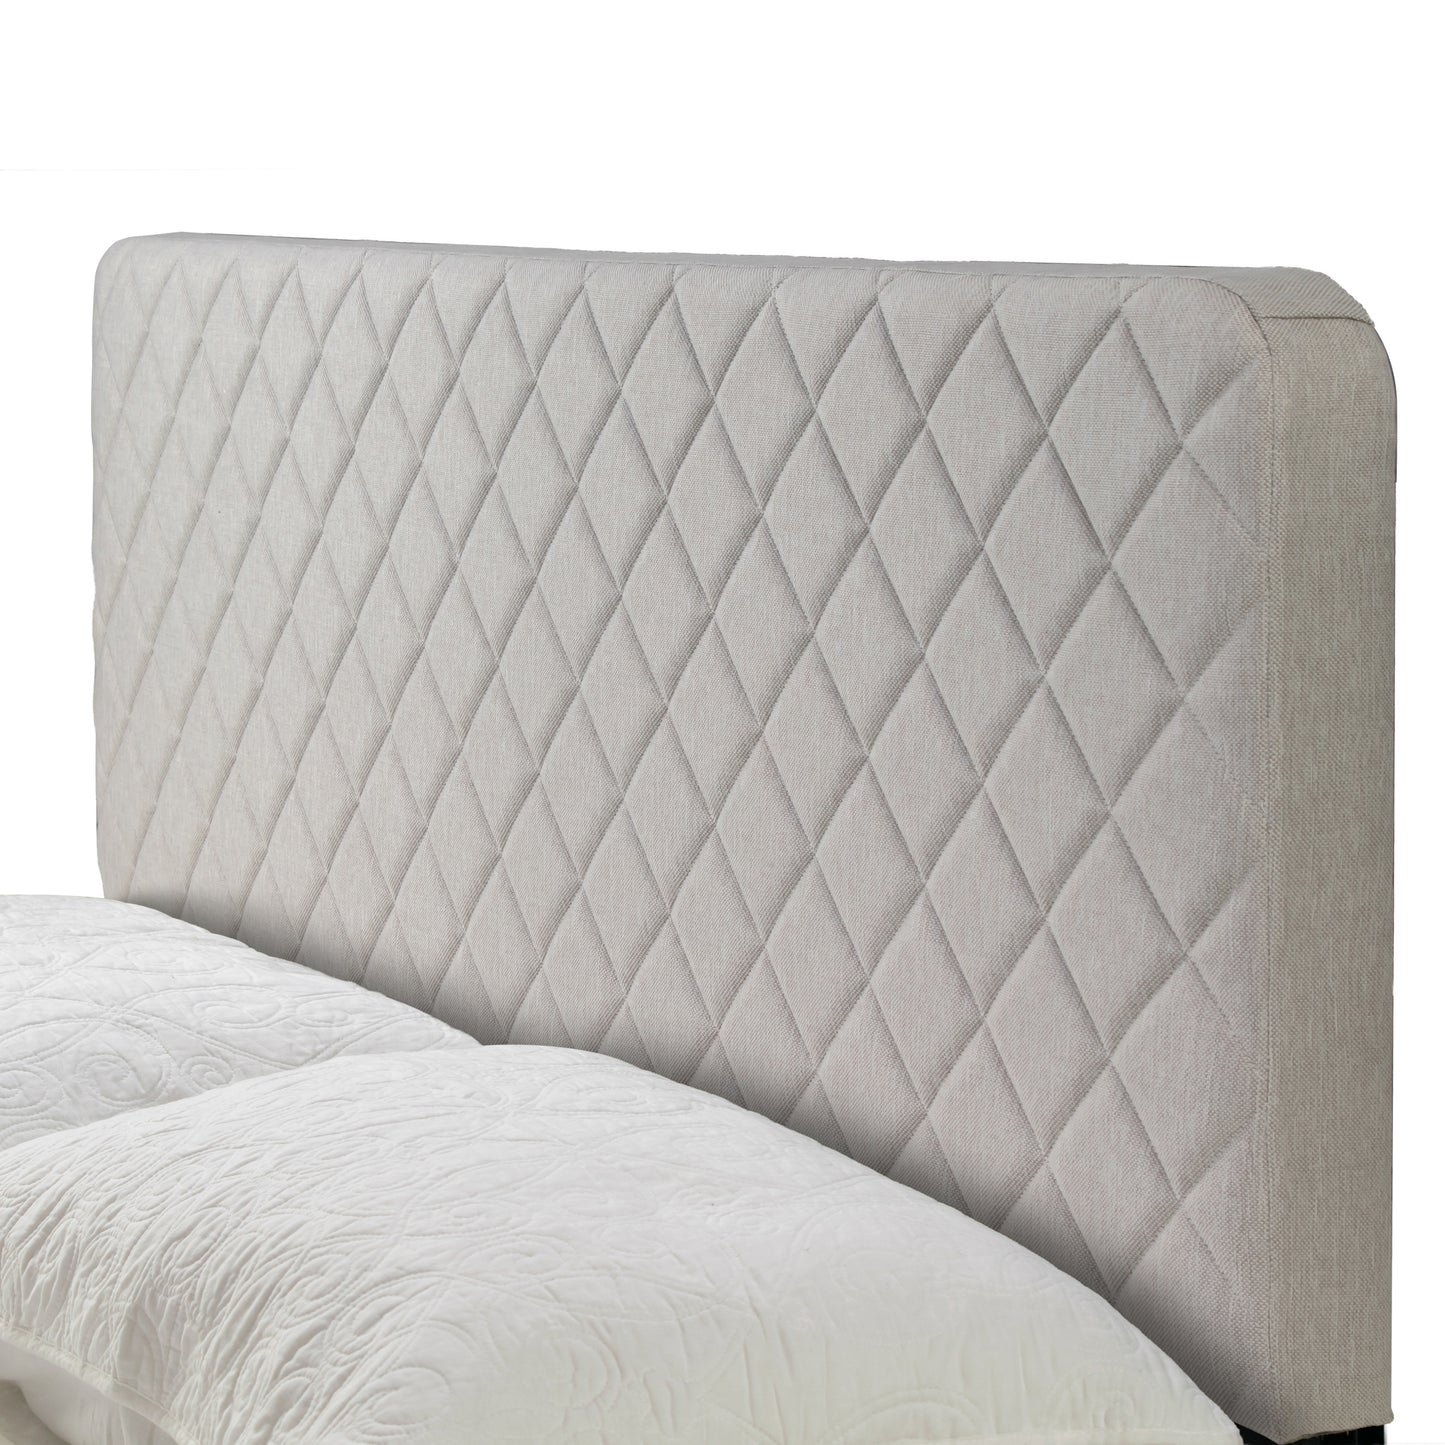 Aurum Beige Fabric Queen Bed with Decorative Stitching